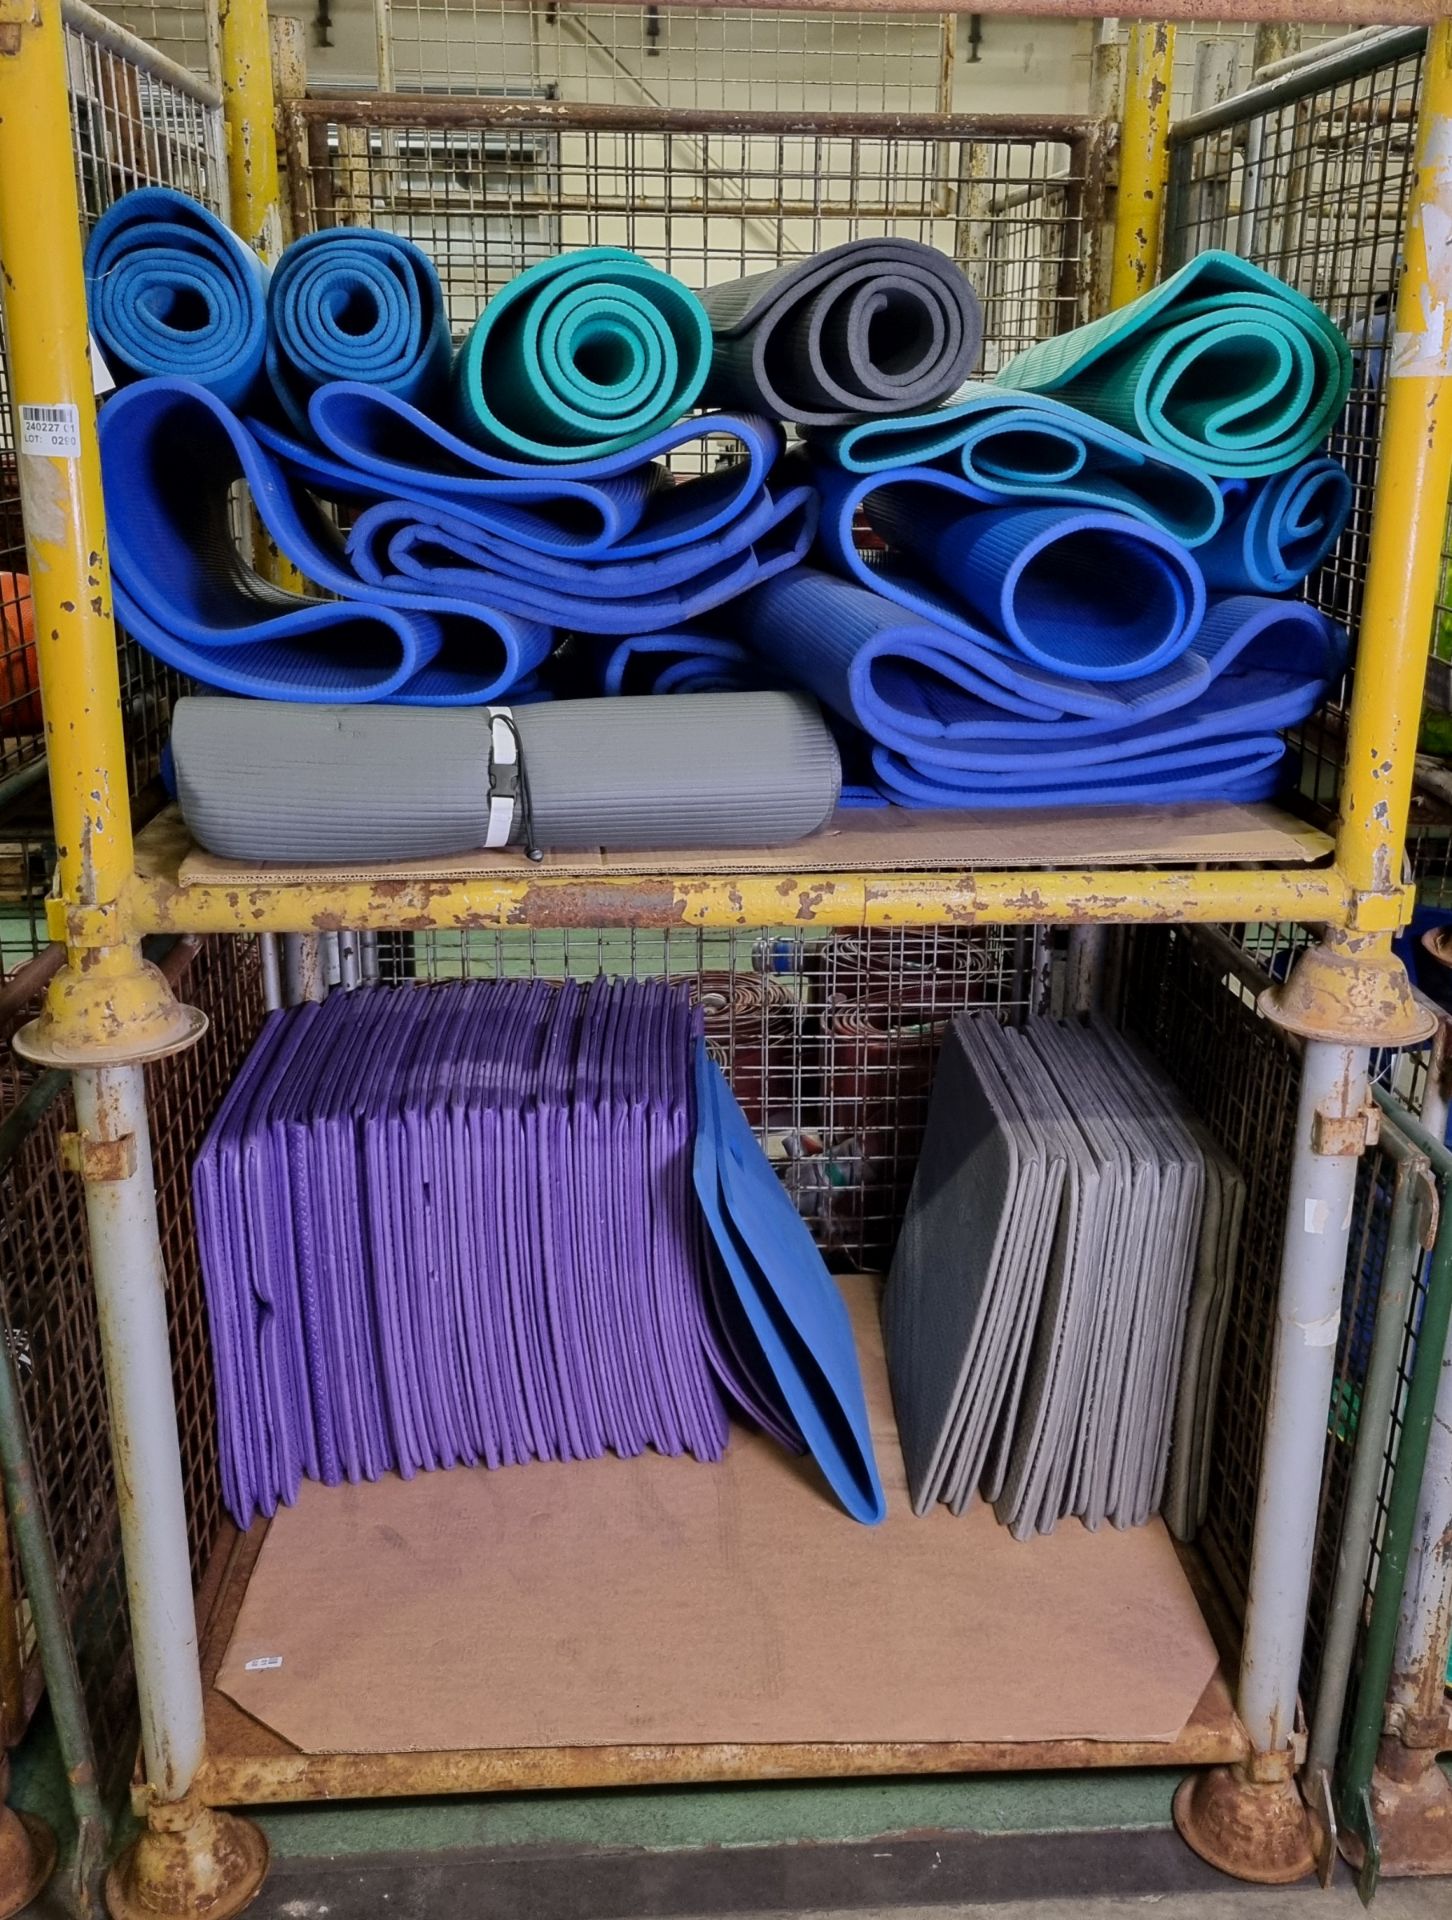 35x folding yoga mats, 17x roll-up yoga mats mixed colours and lengths